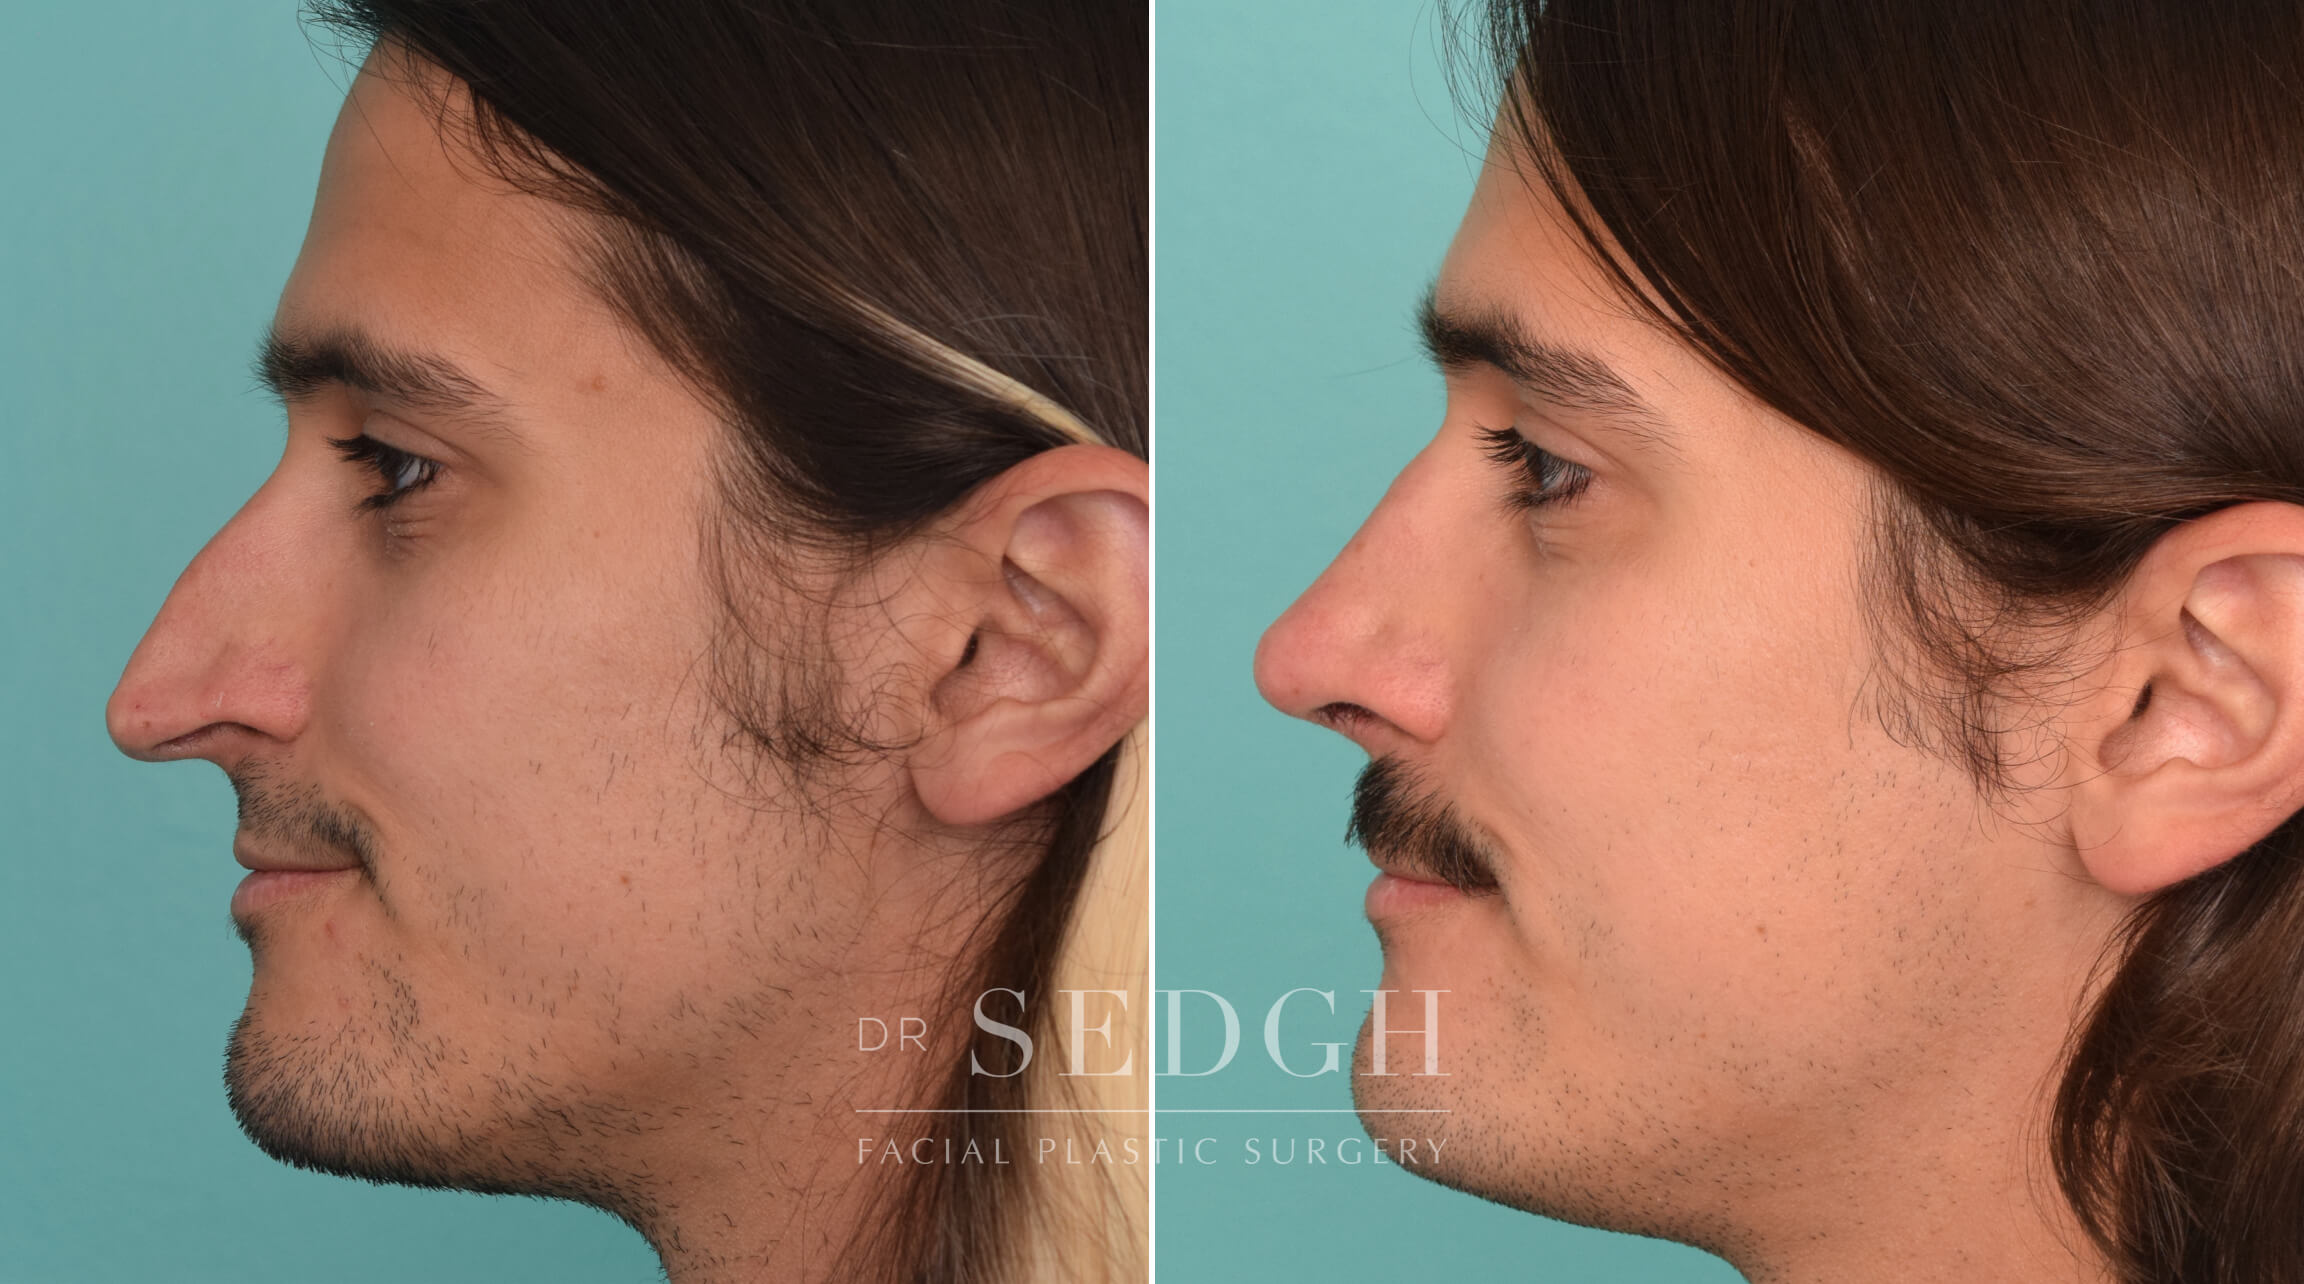 Hispanic Rhinoplasty Before & After Photos | Dr. Sedgh